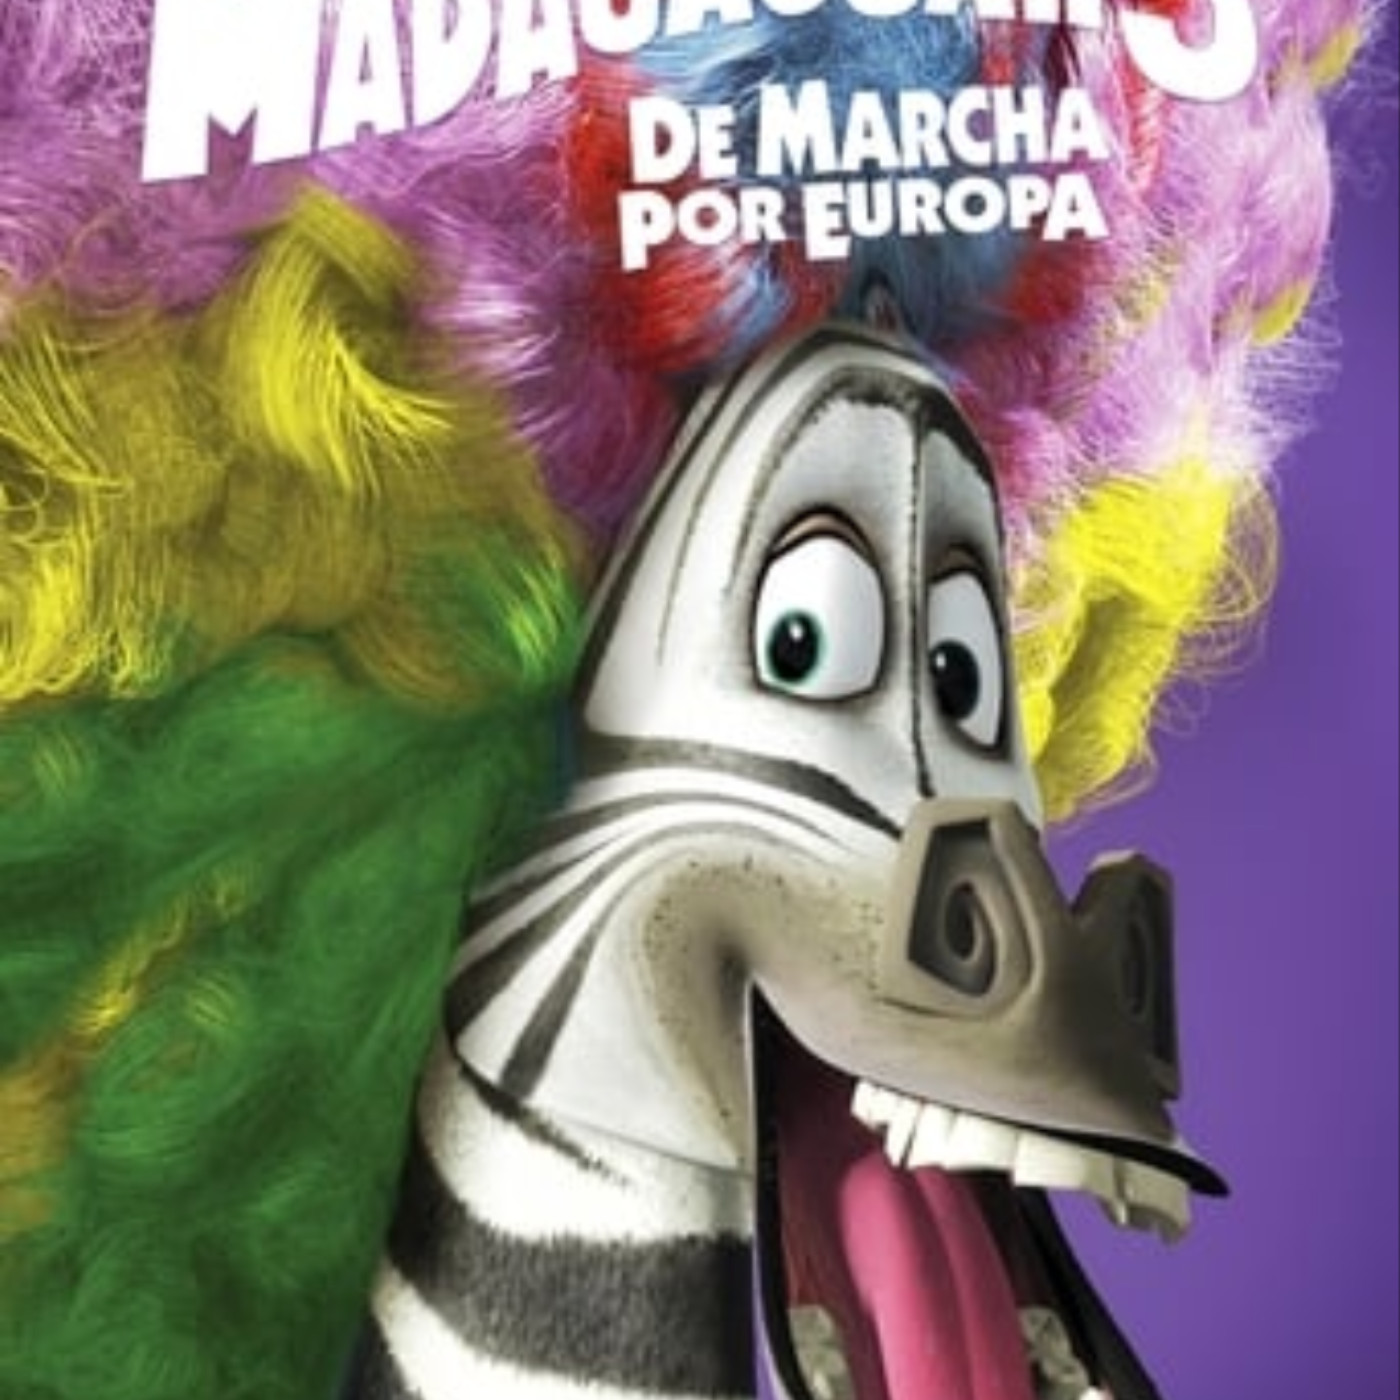 Ver Madagascar 3: De marcha por Europa 2012 online gratis en español y  latino | Podcast on SoundOn